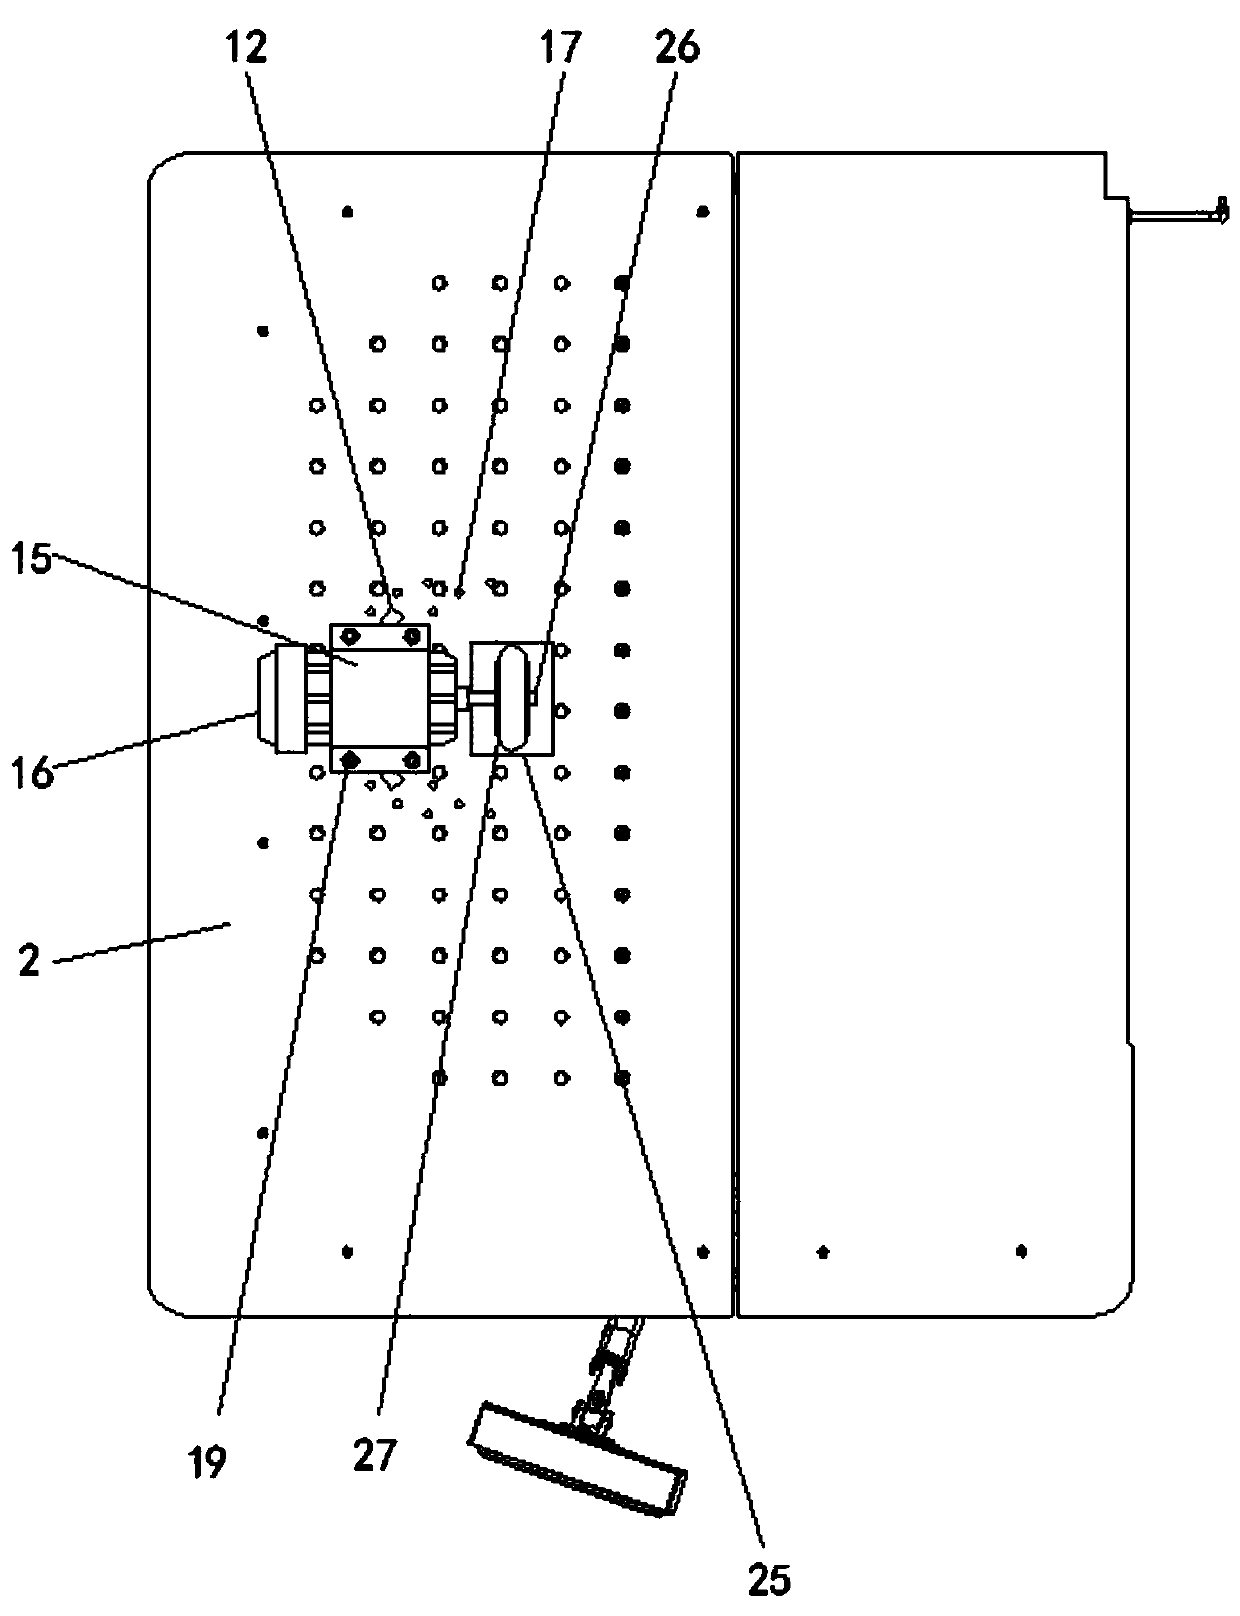 Rotation mechanism of overlock sewing machine